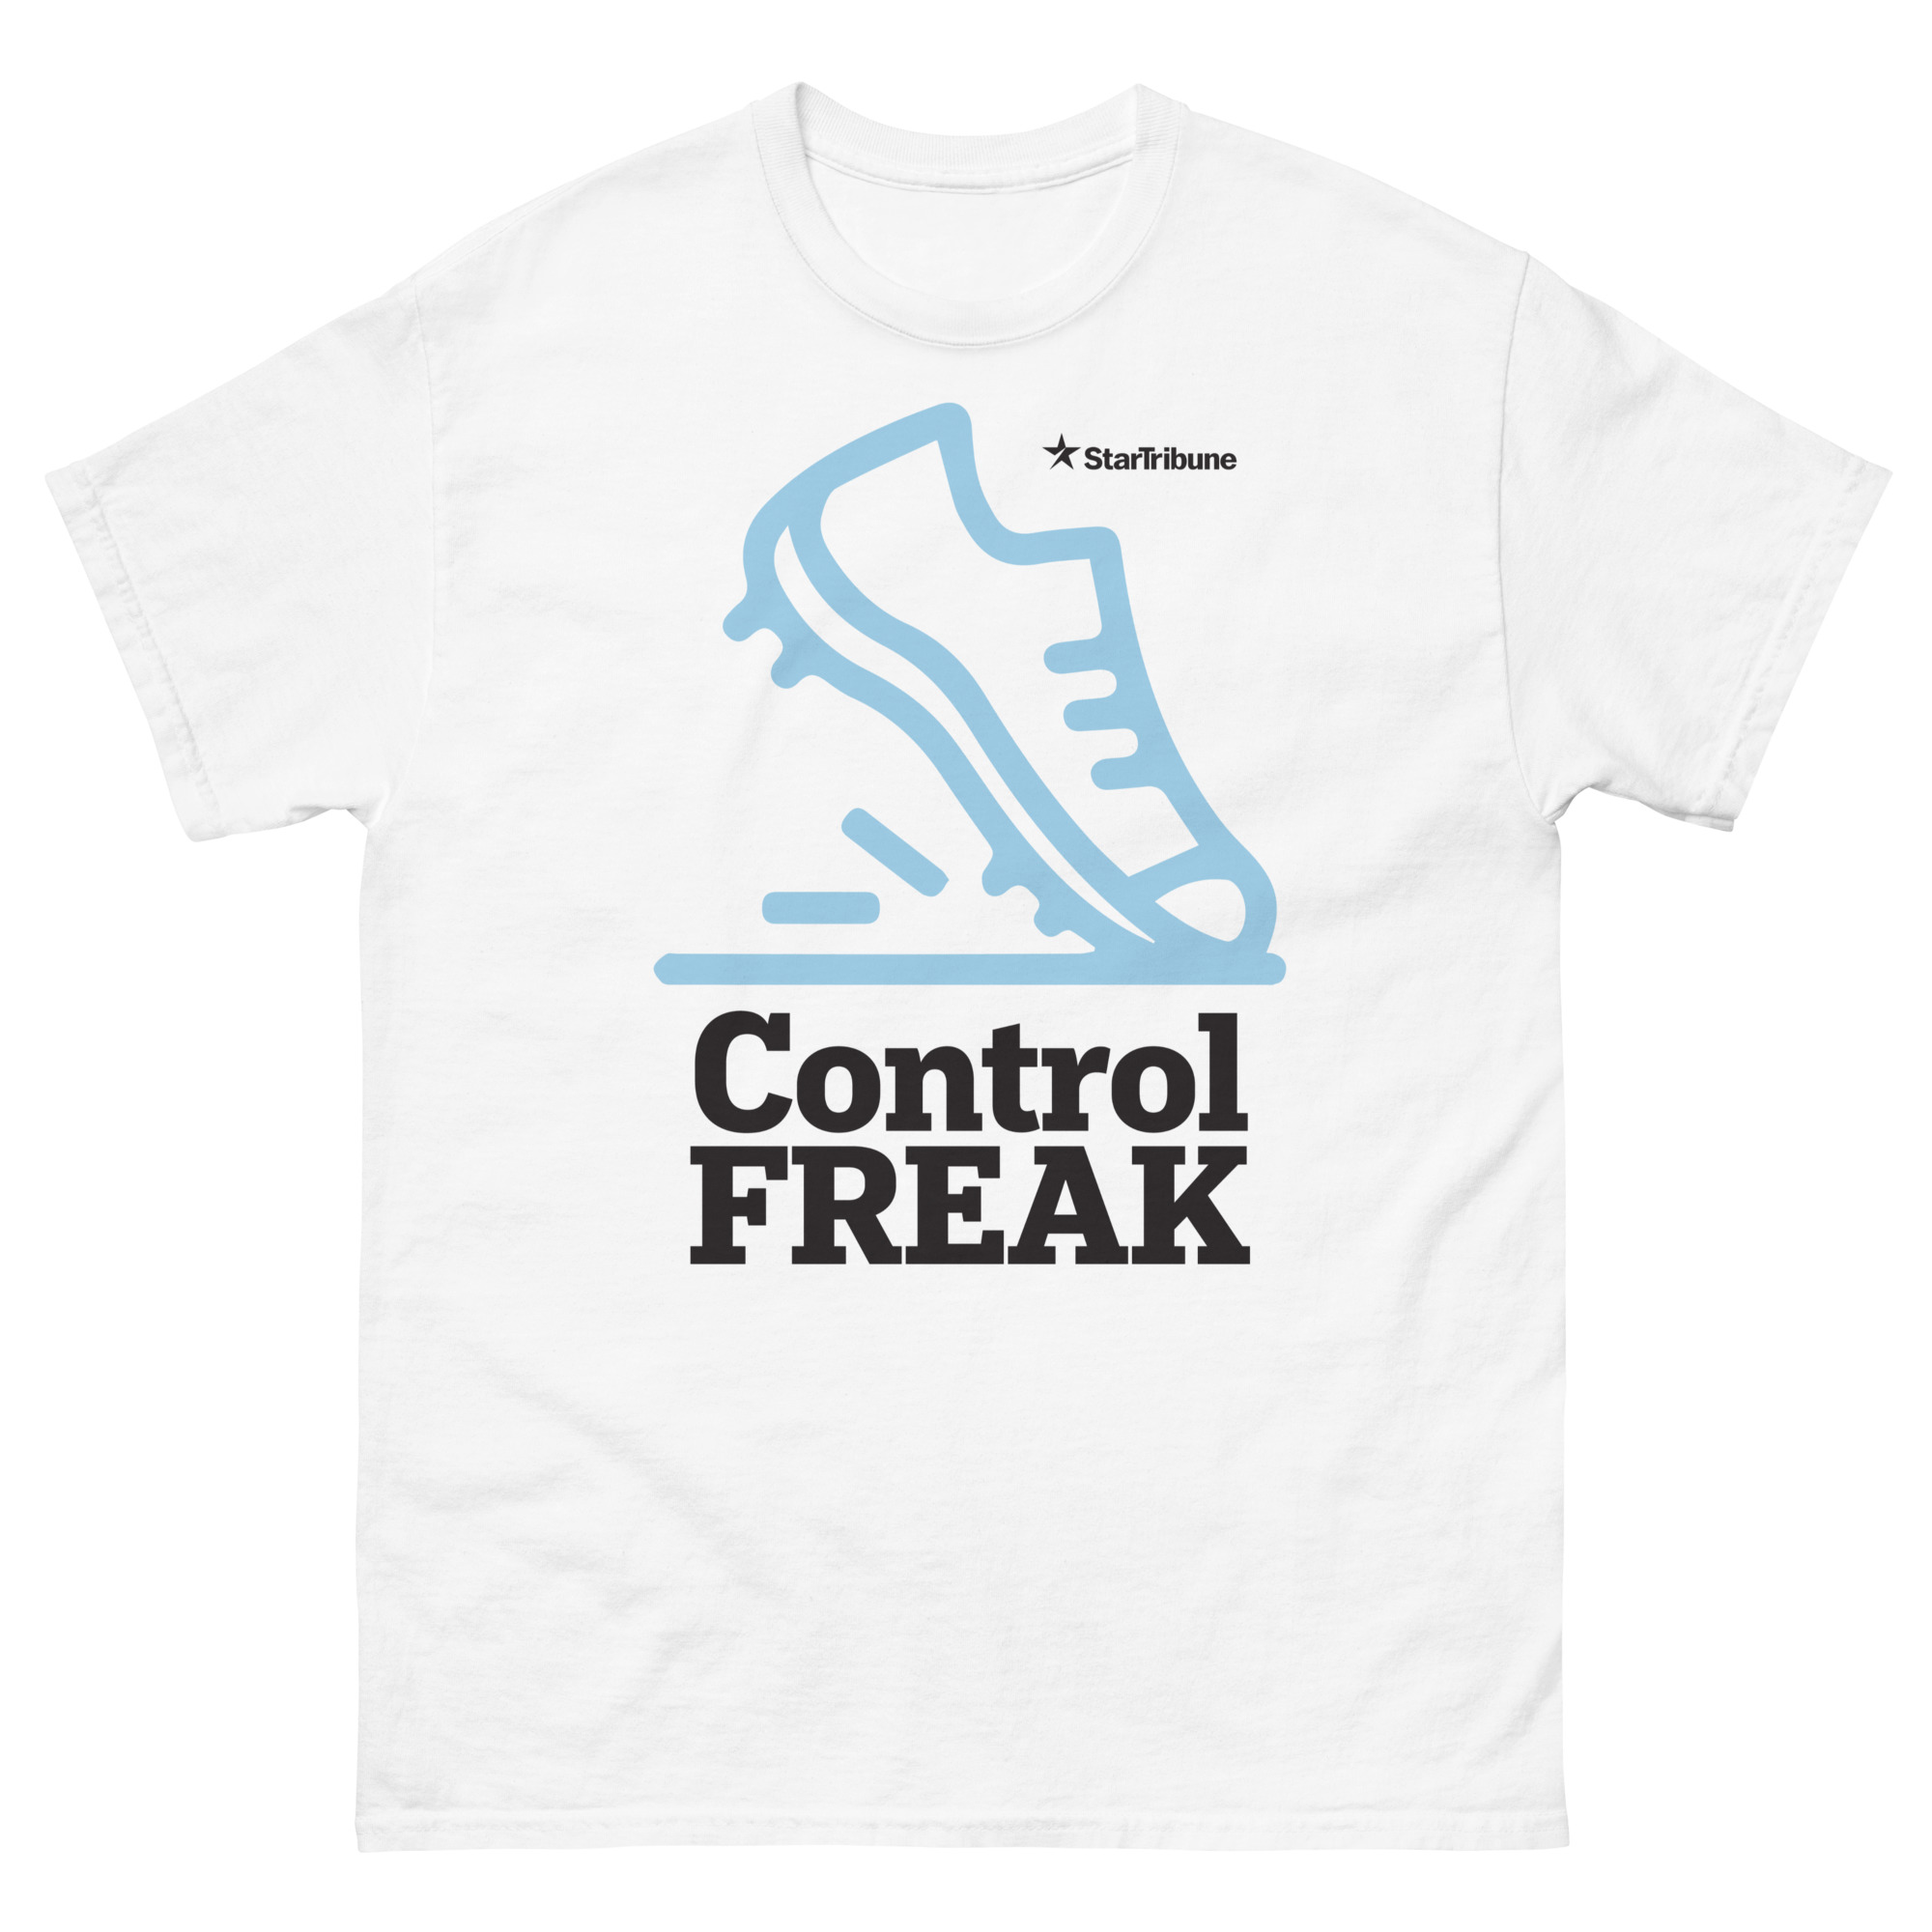 Control Freak T-shirt On Demand - Star Tribune Shop